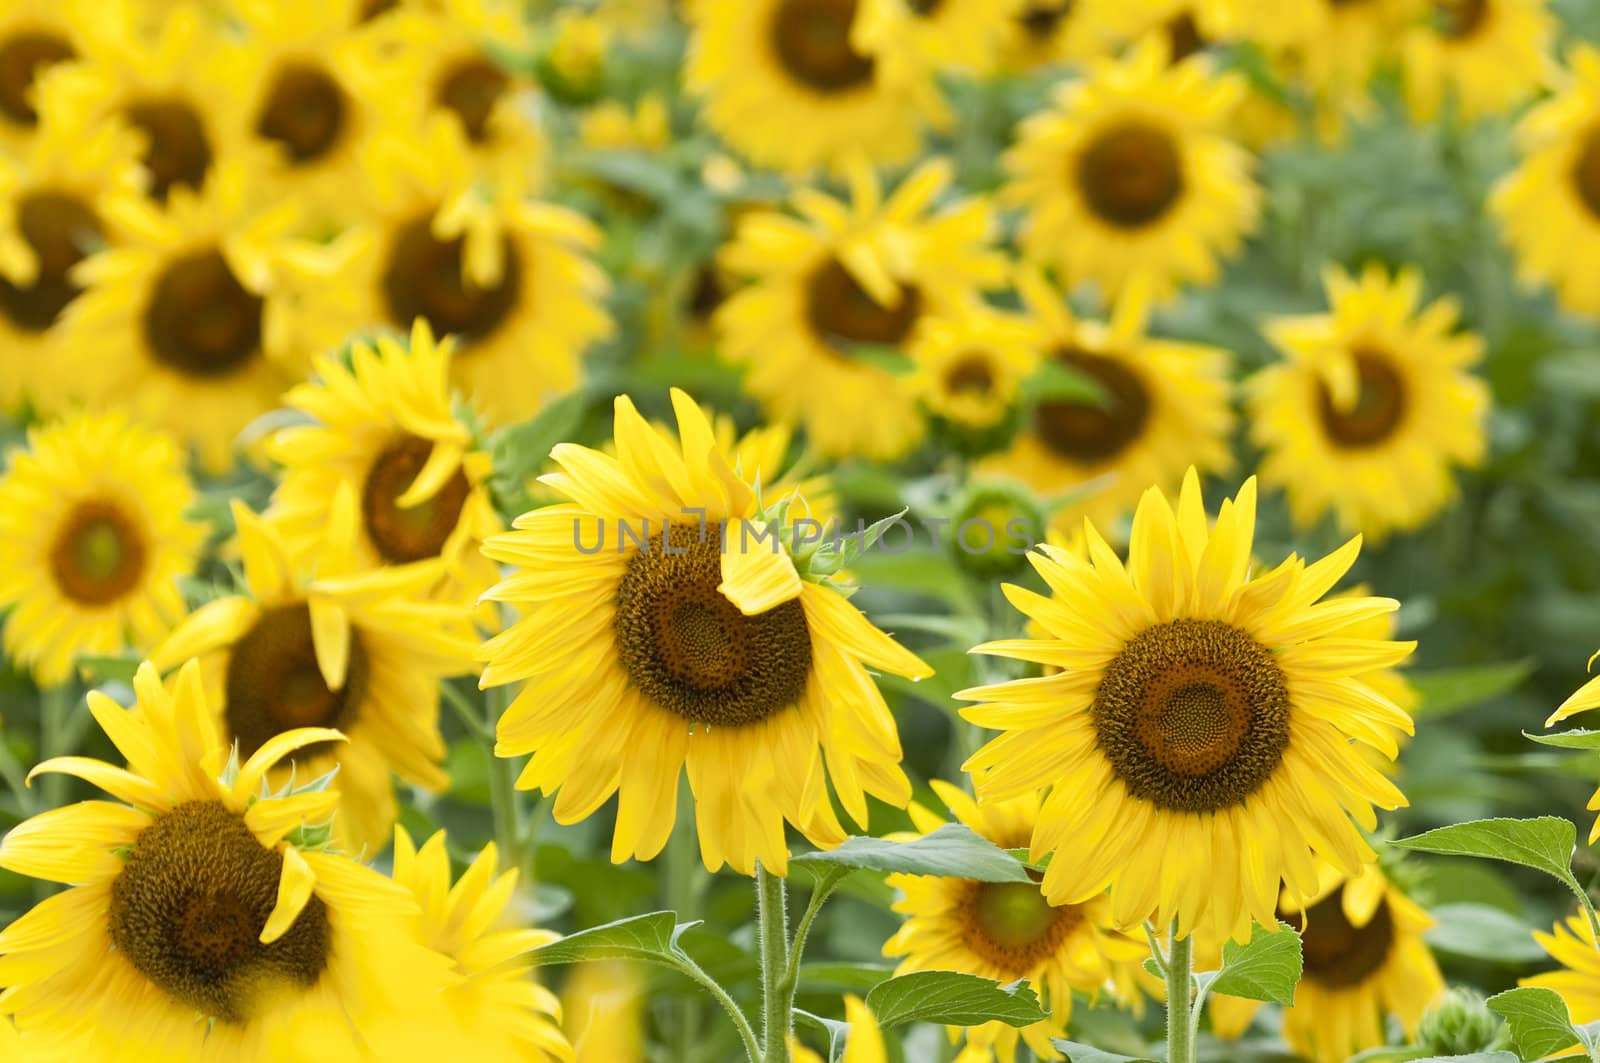 Sunflowers in full bloom in summer